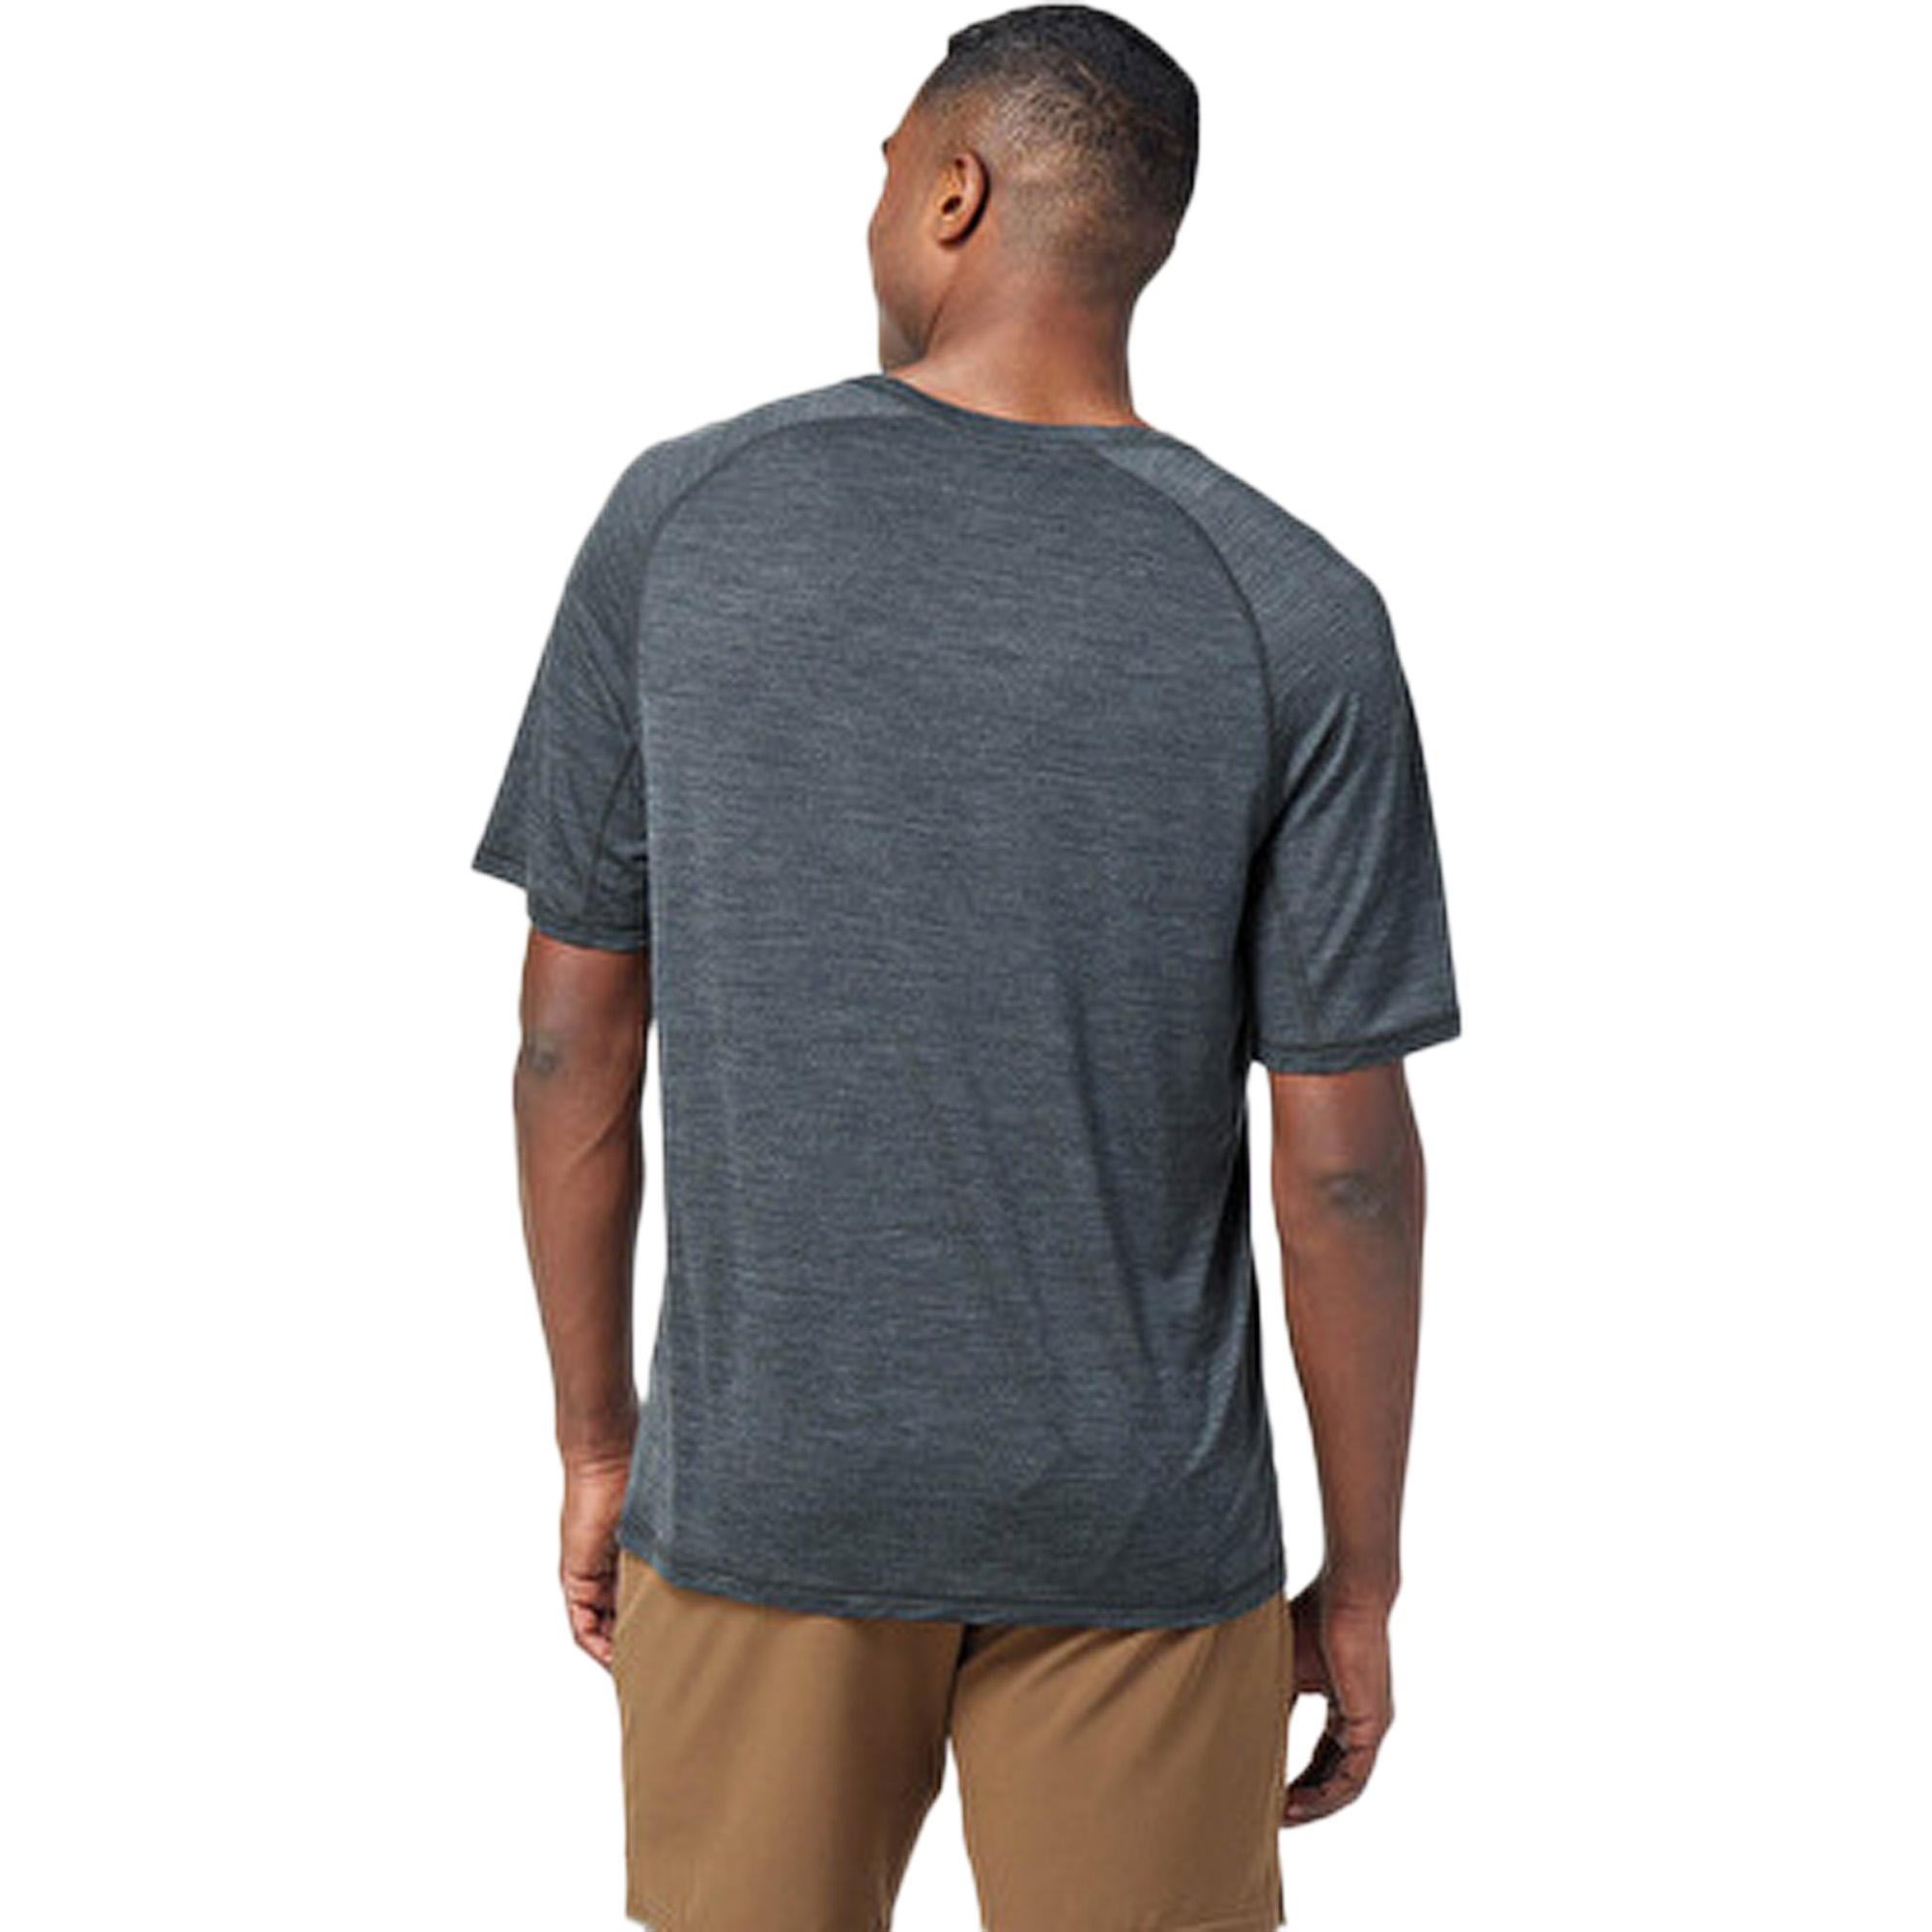 Smartwool Active Ultralite Short Sleeve T-Shirt